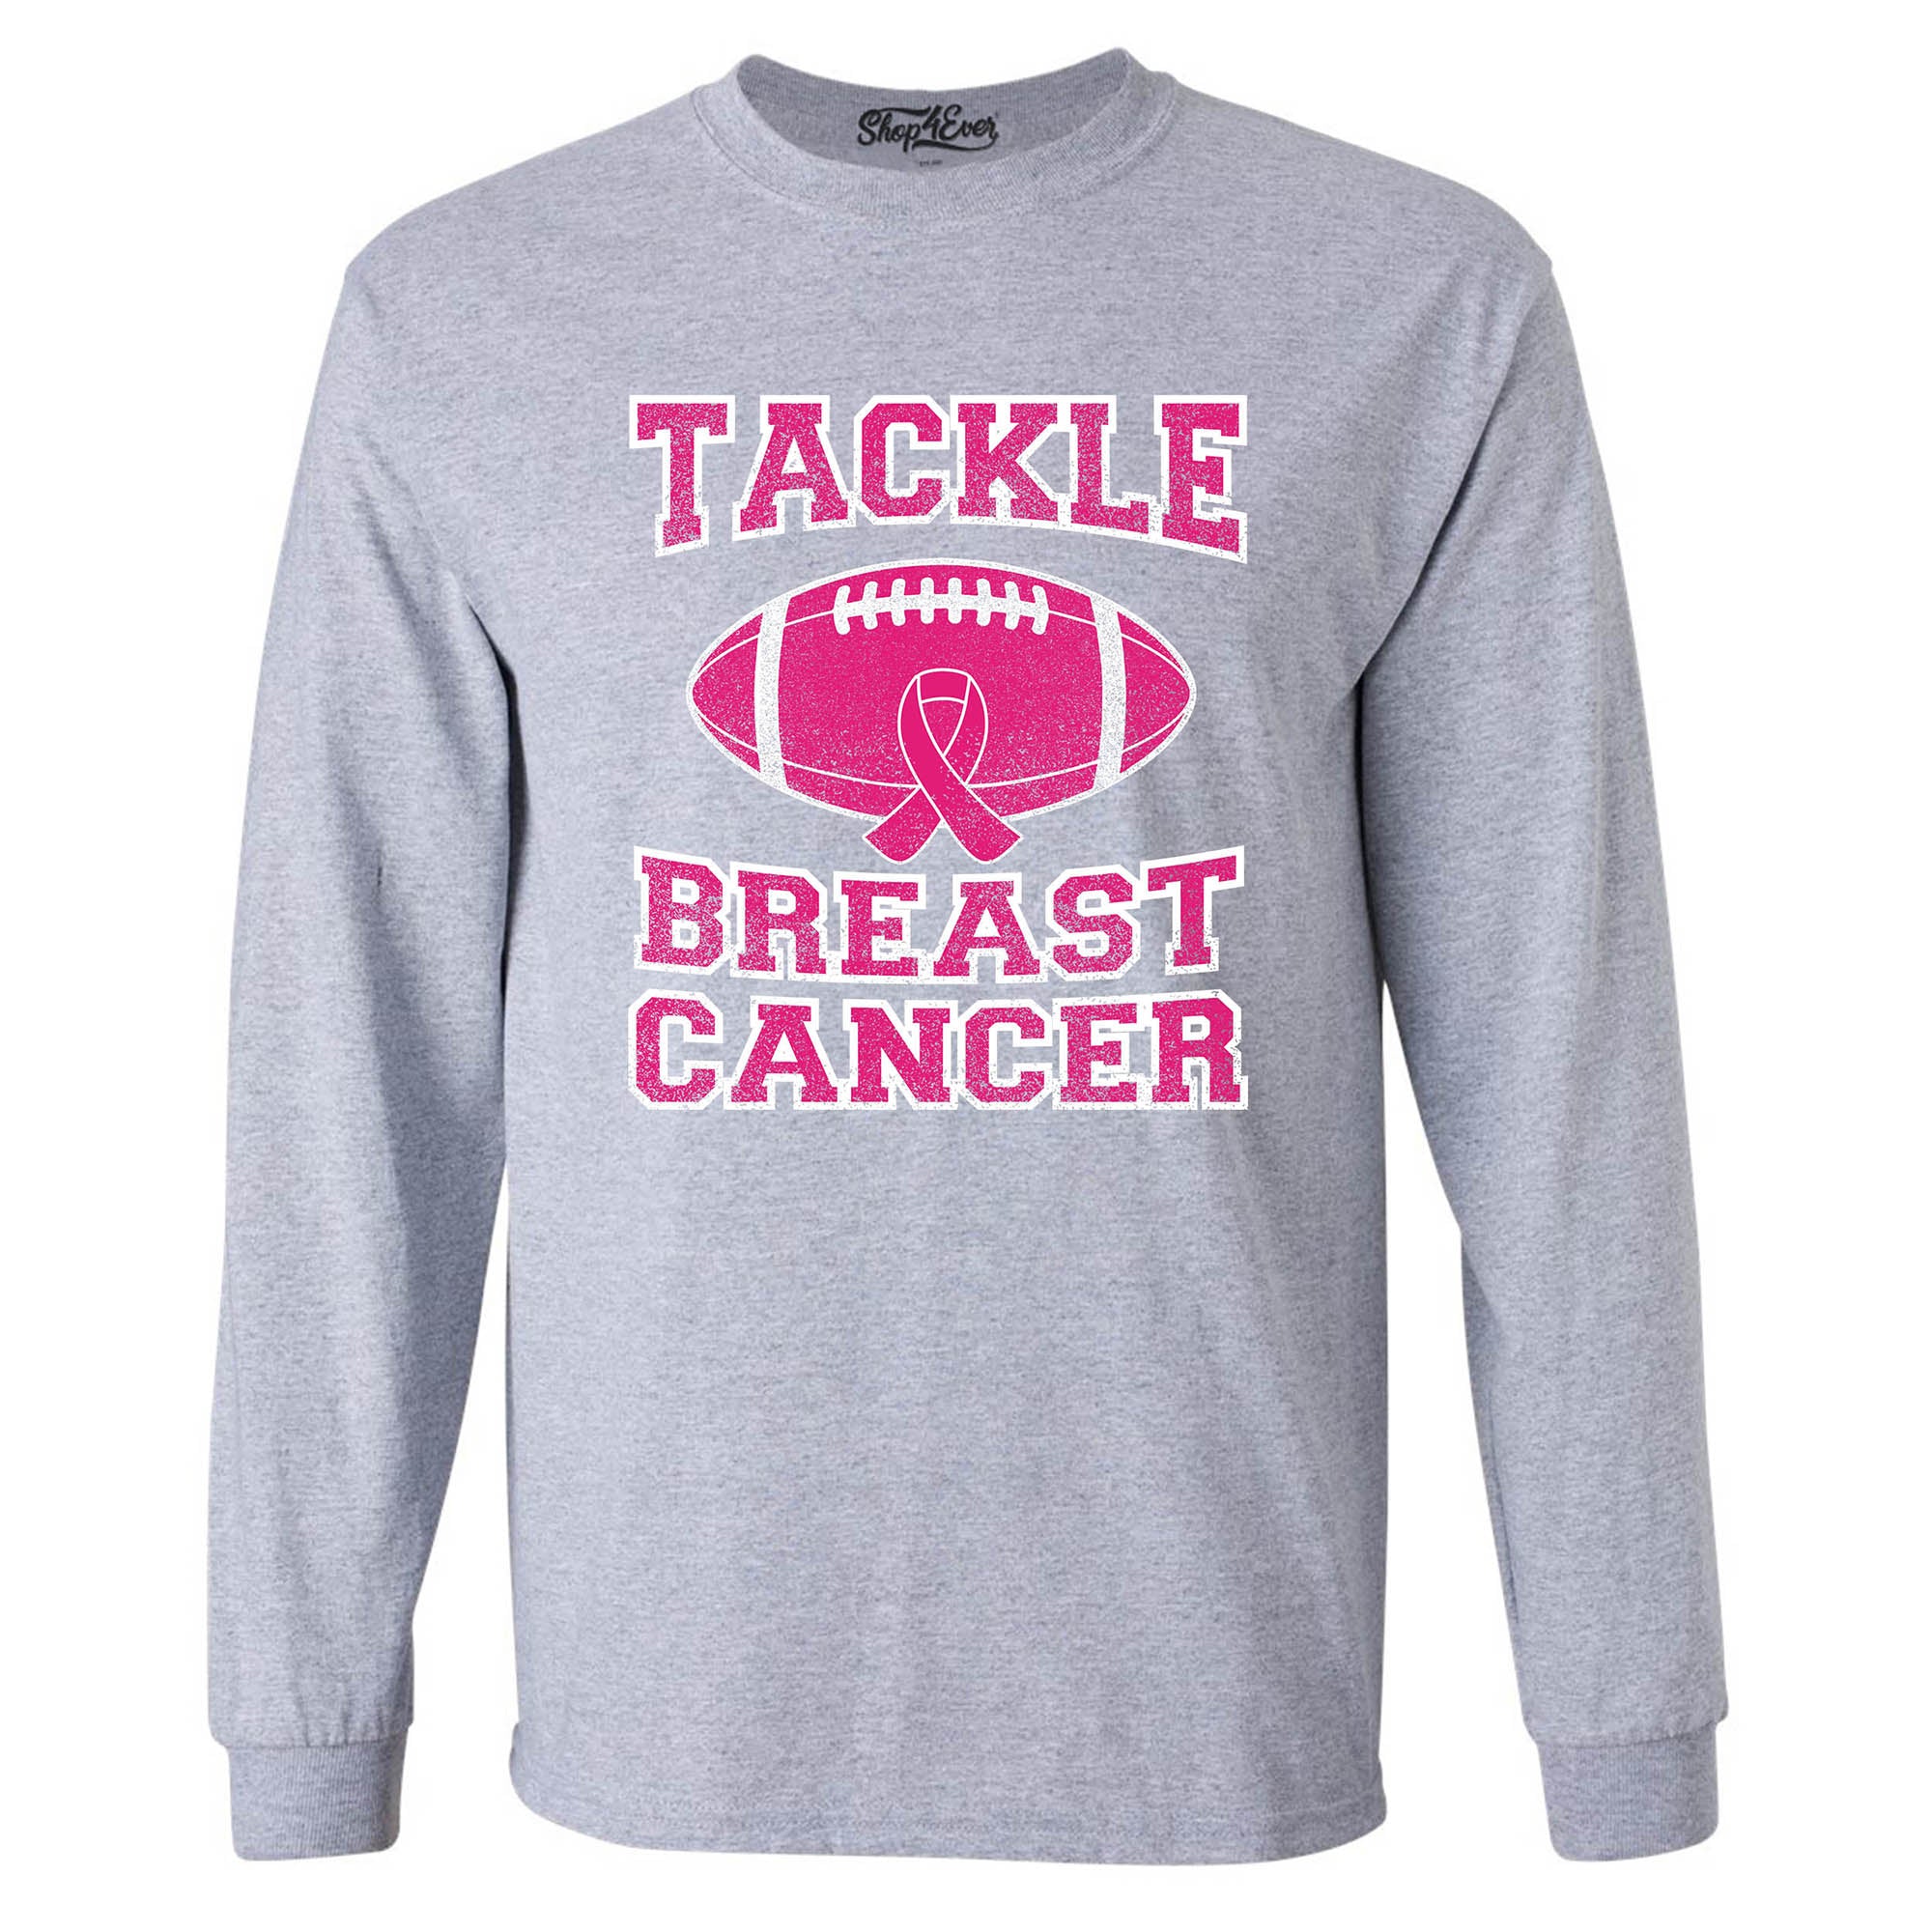 Tackle Breast Cancer Long Sleeve Shirt Breast Cancer Awareness Shirts